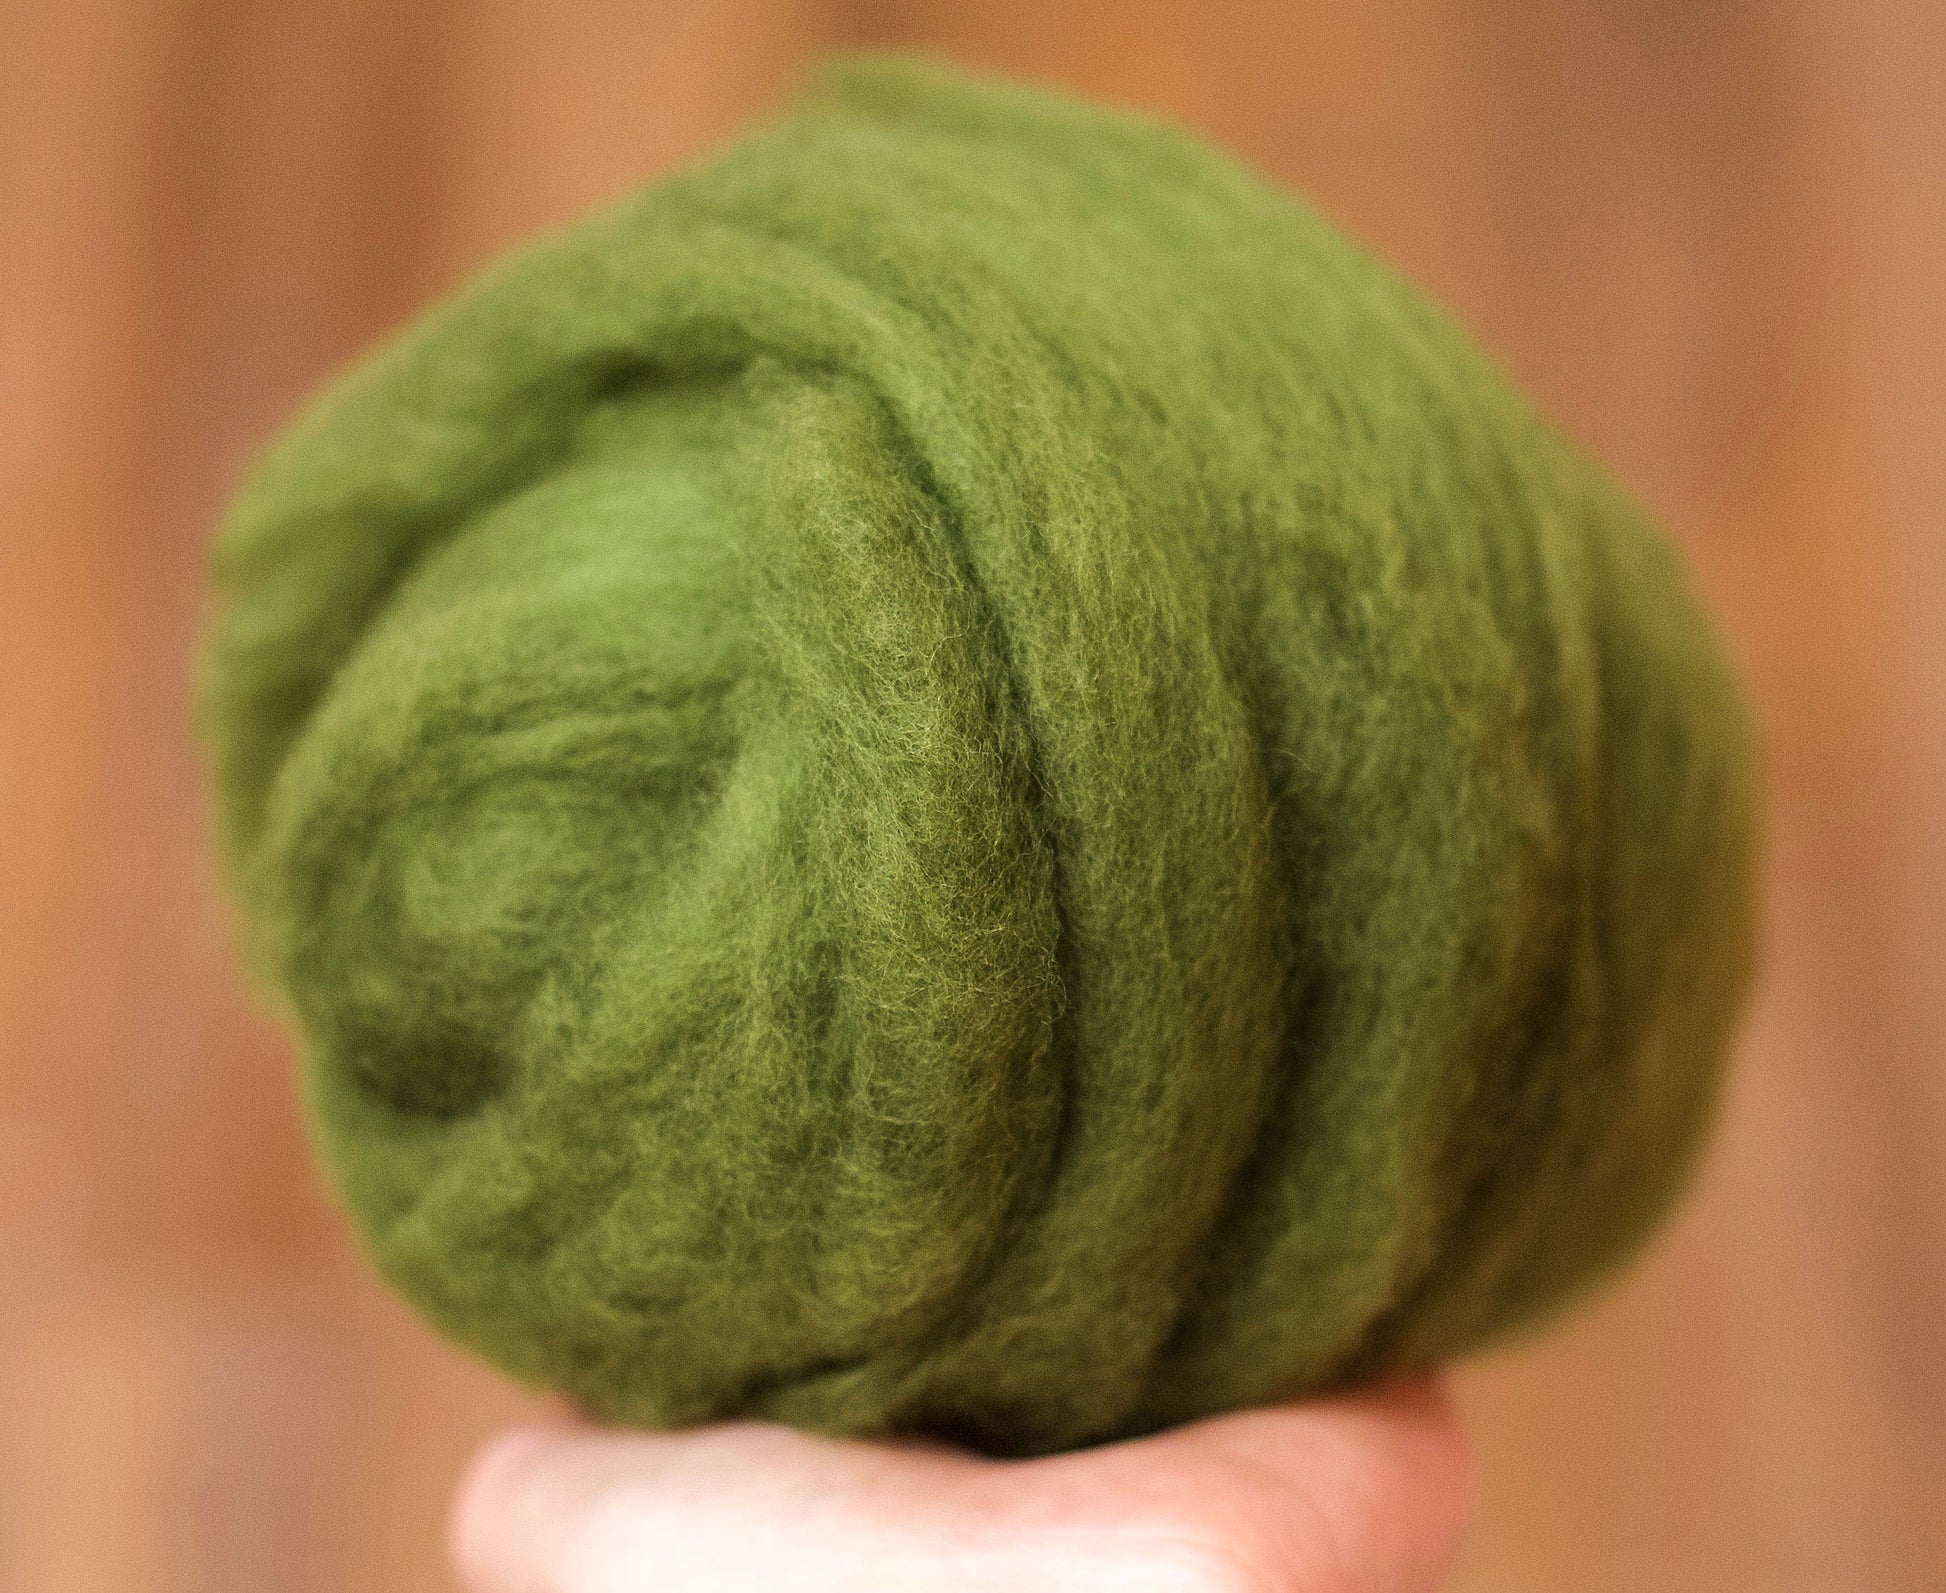 Ivy Green - Merino Wool Batting